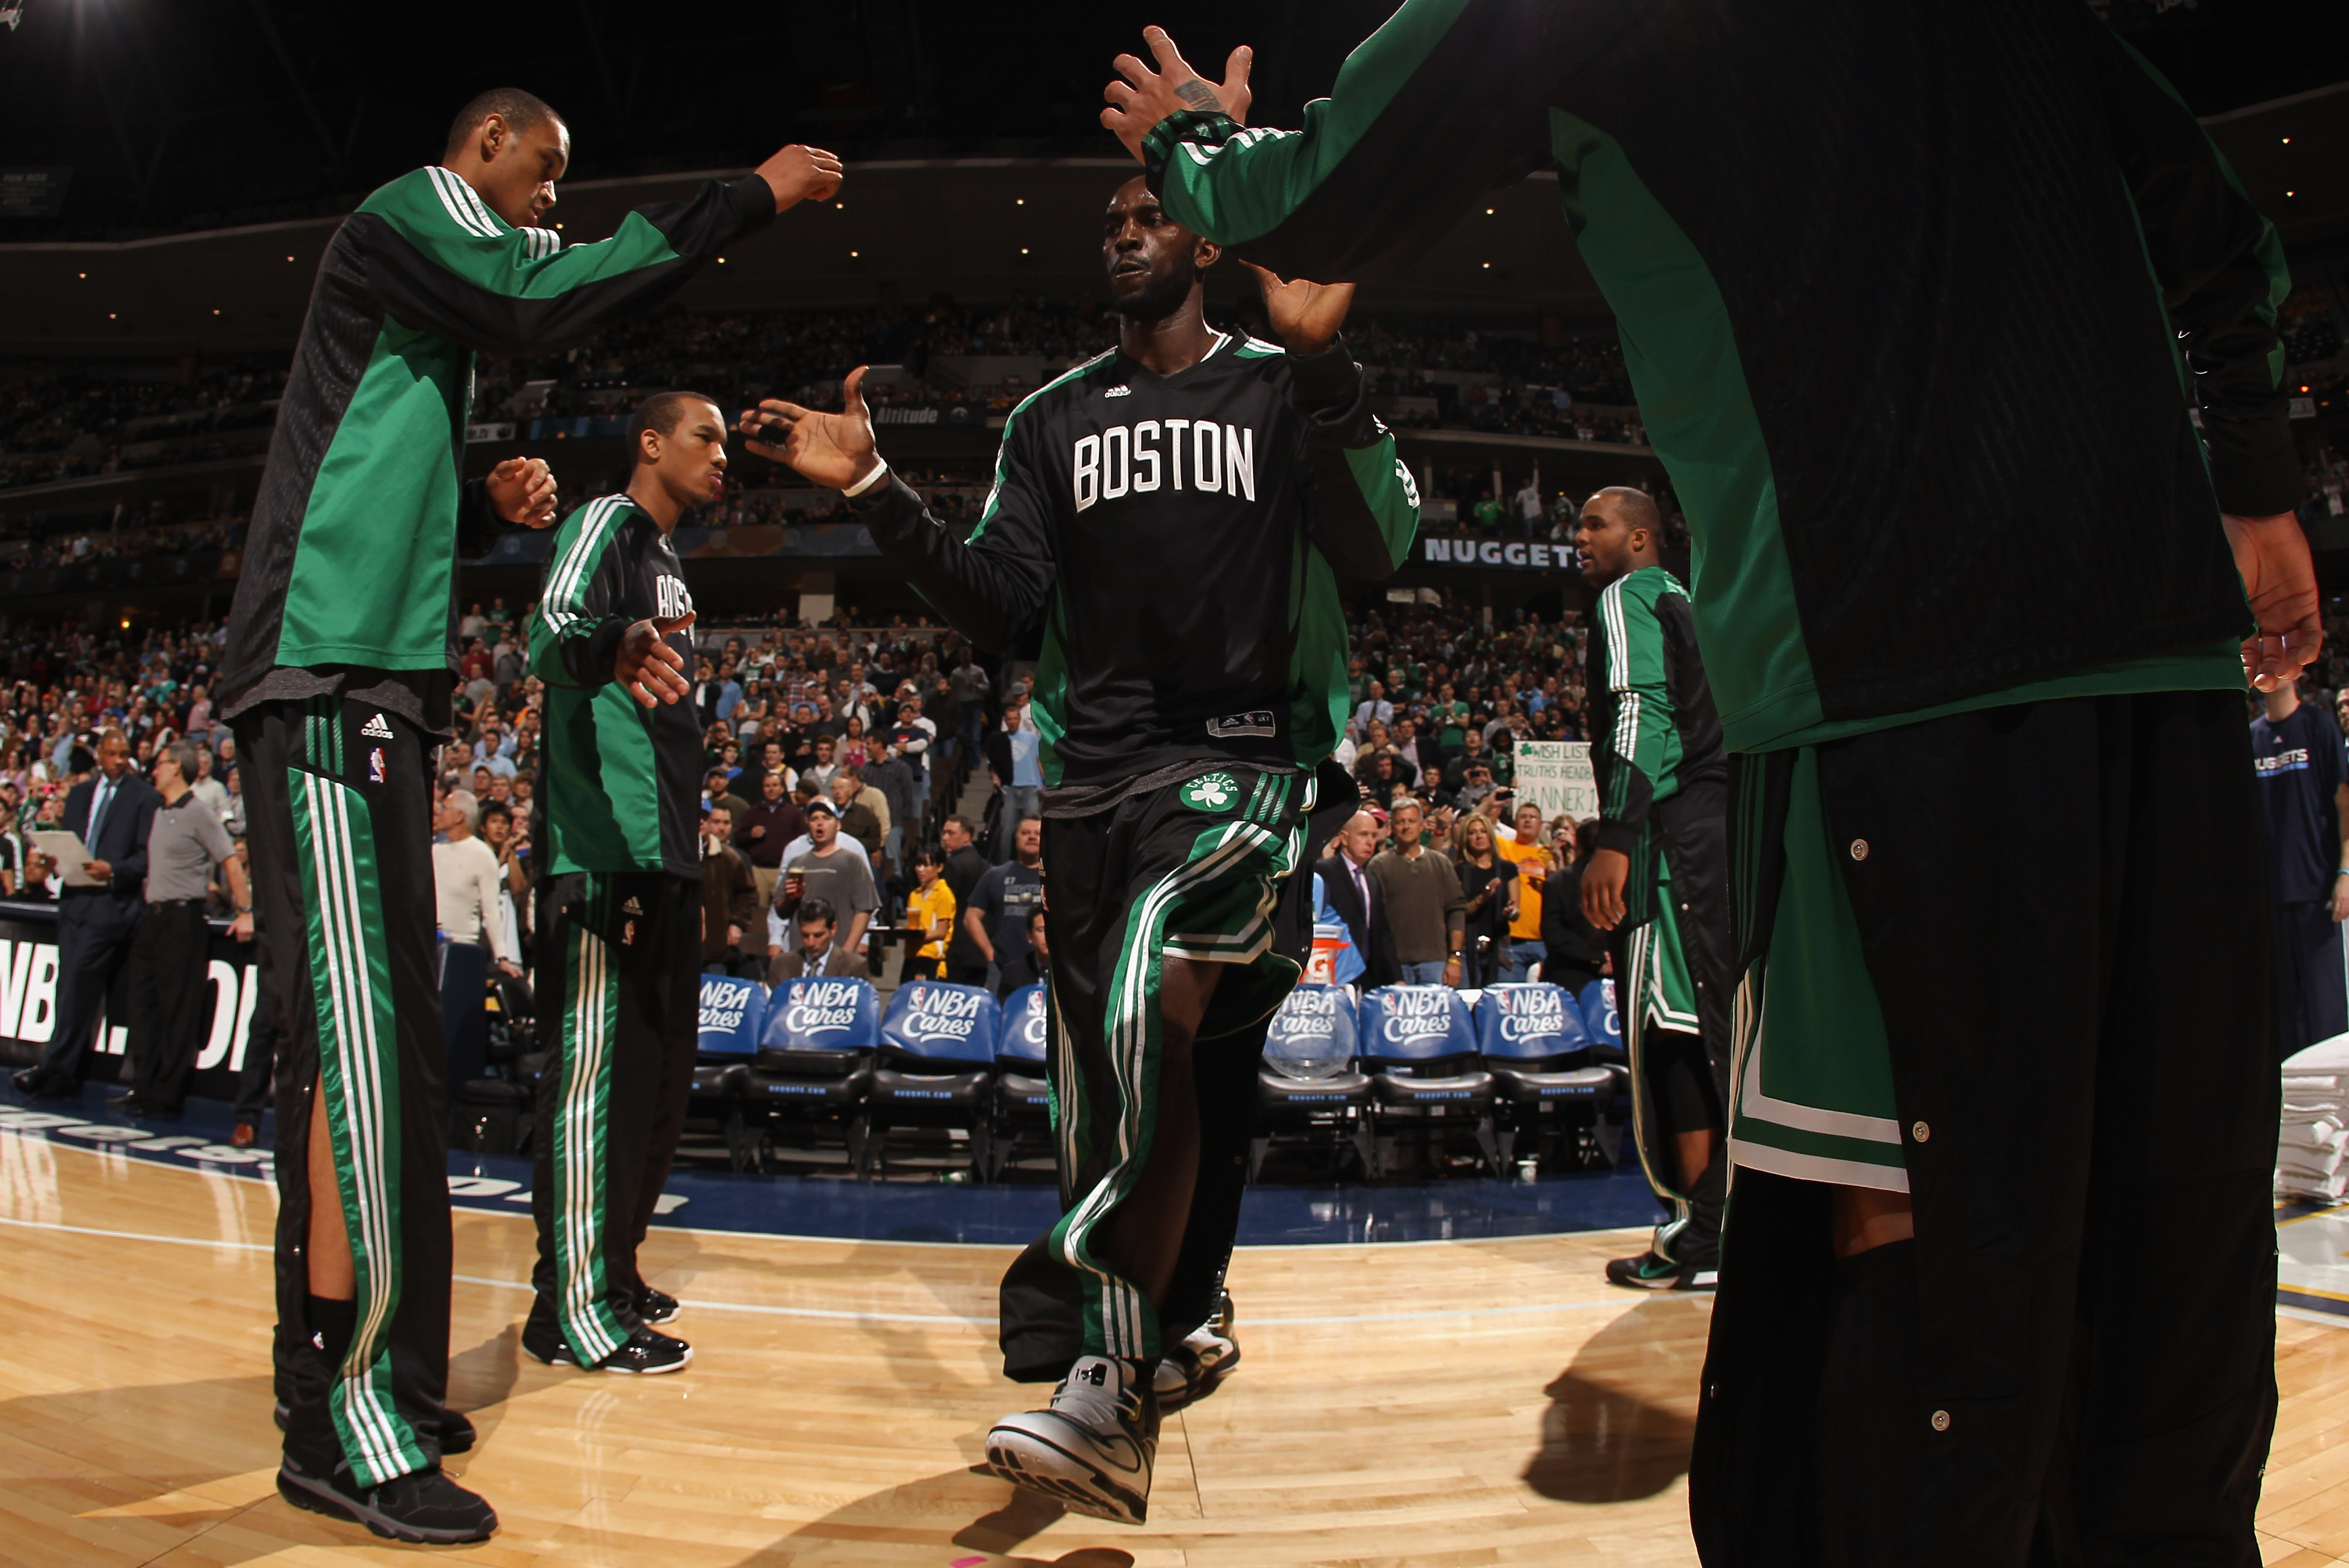 Boston Celtics Official NBA Adidas Kids Youth Size Jeff Green